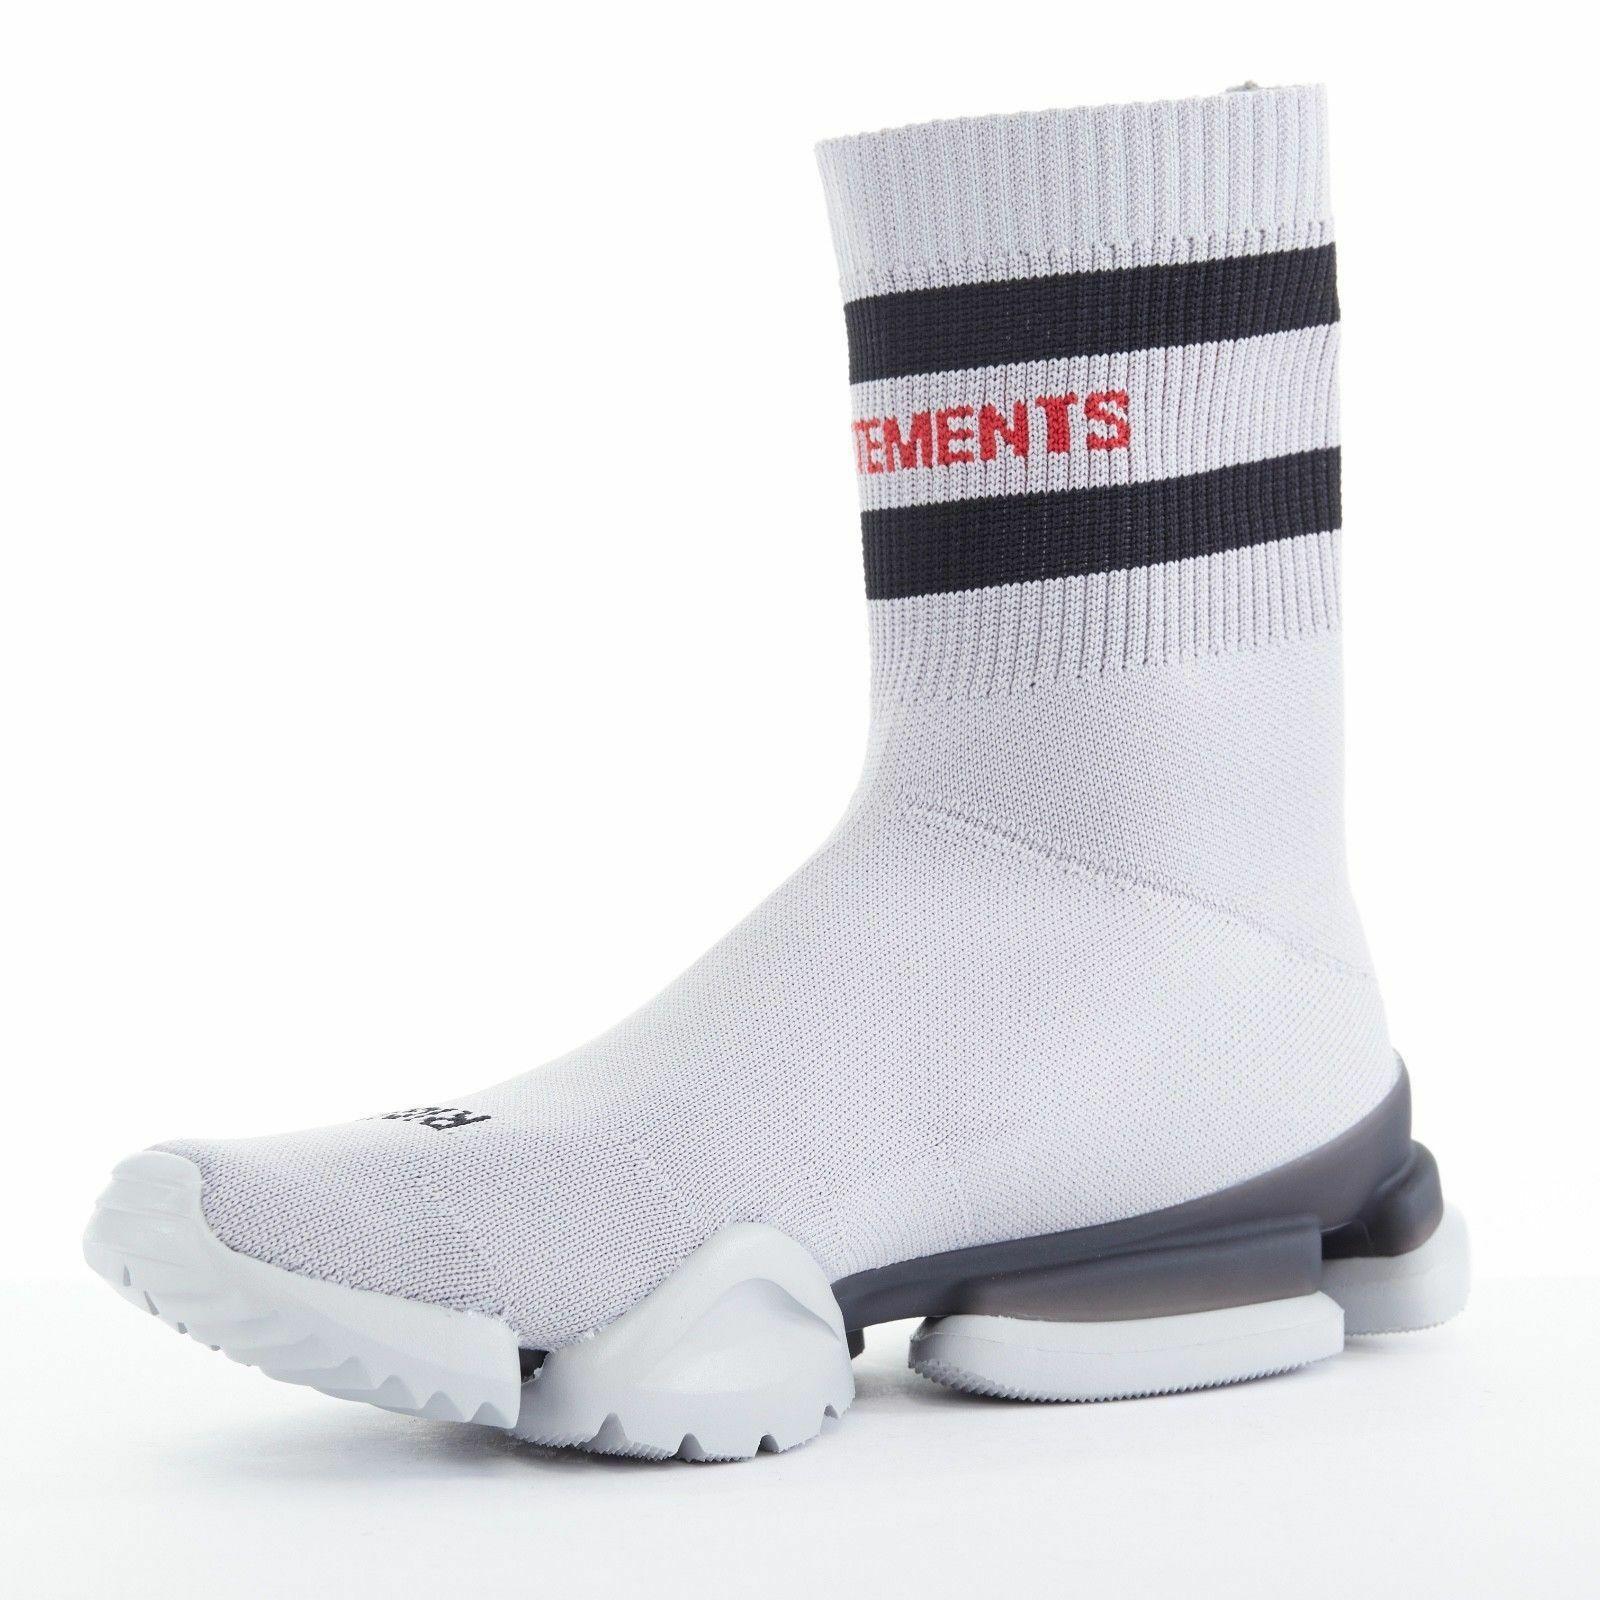 Gray new VETEMENTS REEBOK Sock Runner grey sock knit speed trainer sneakers shoe EU42